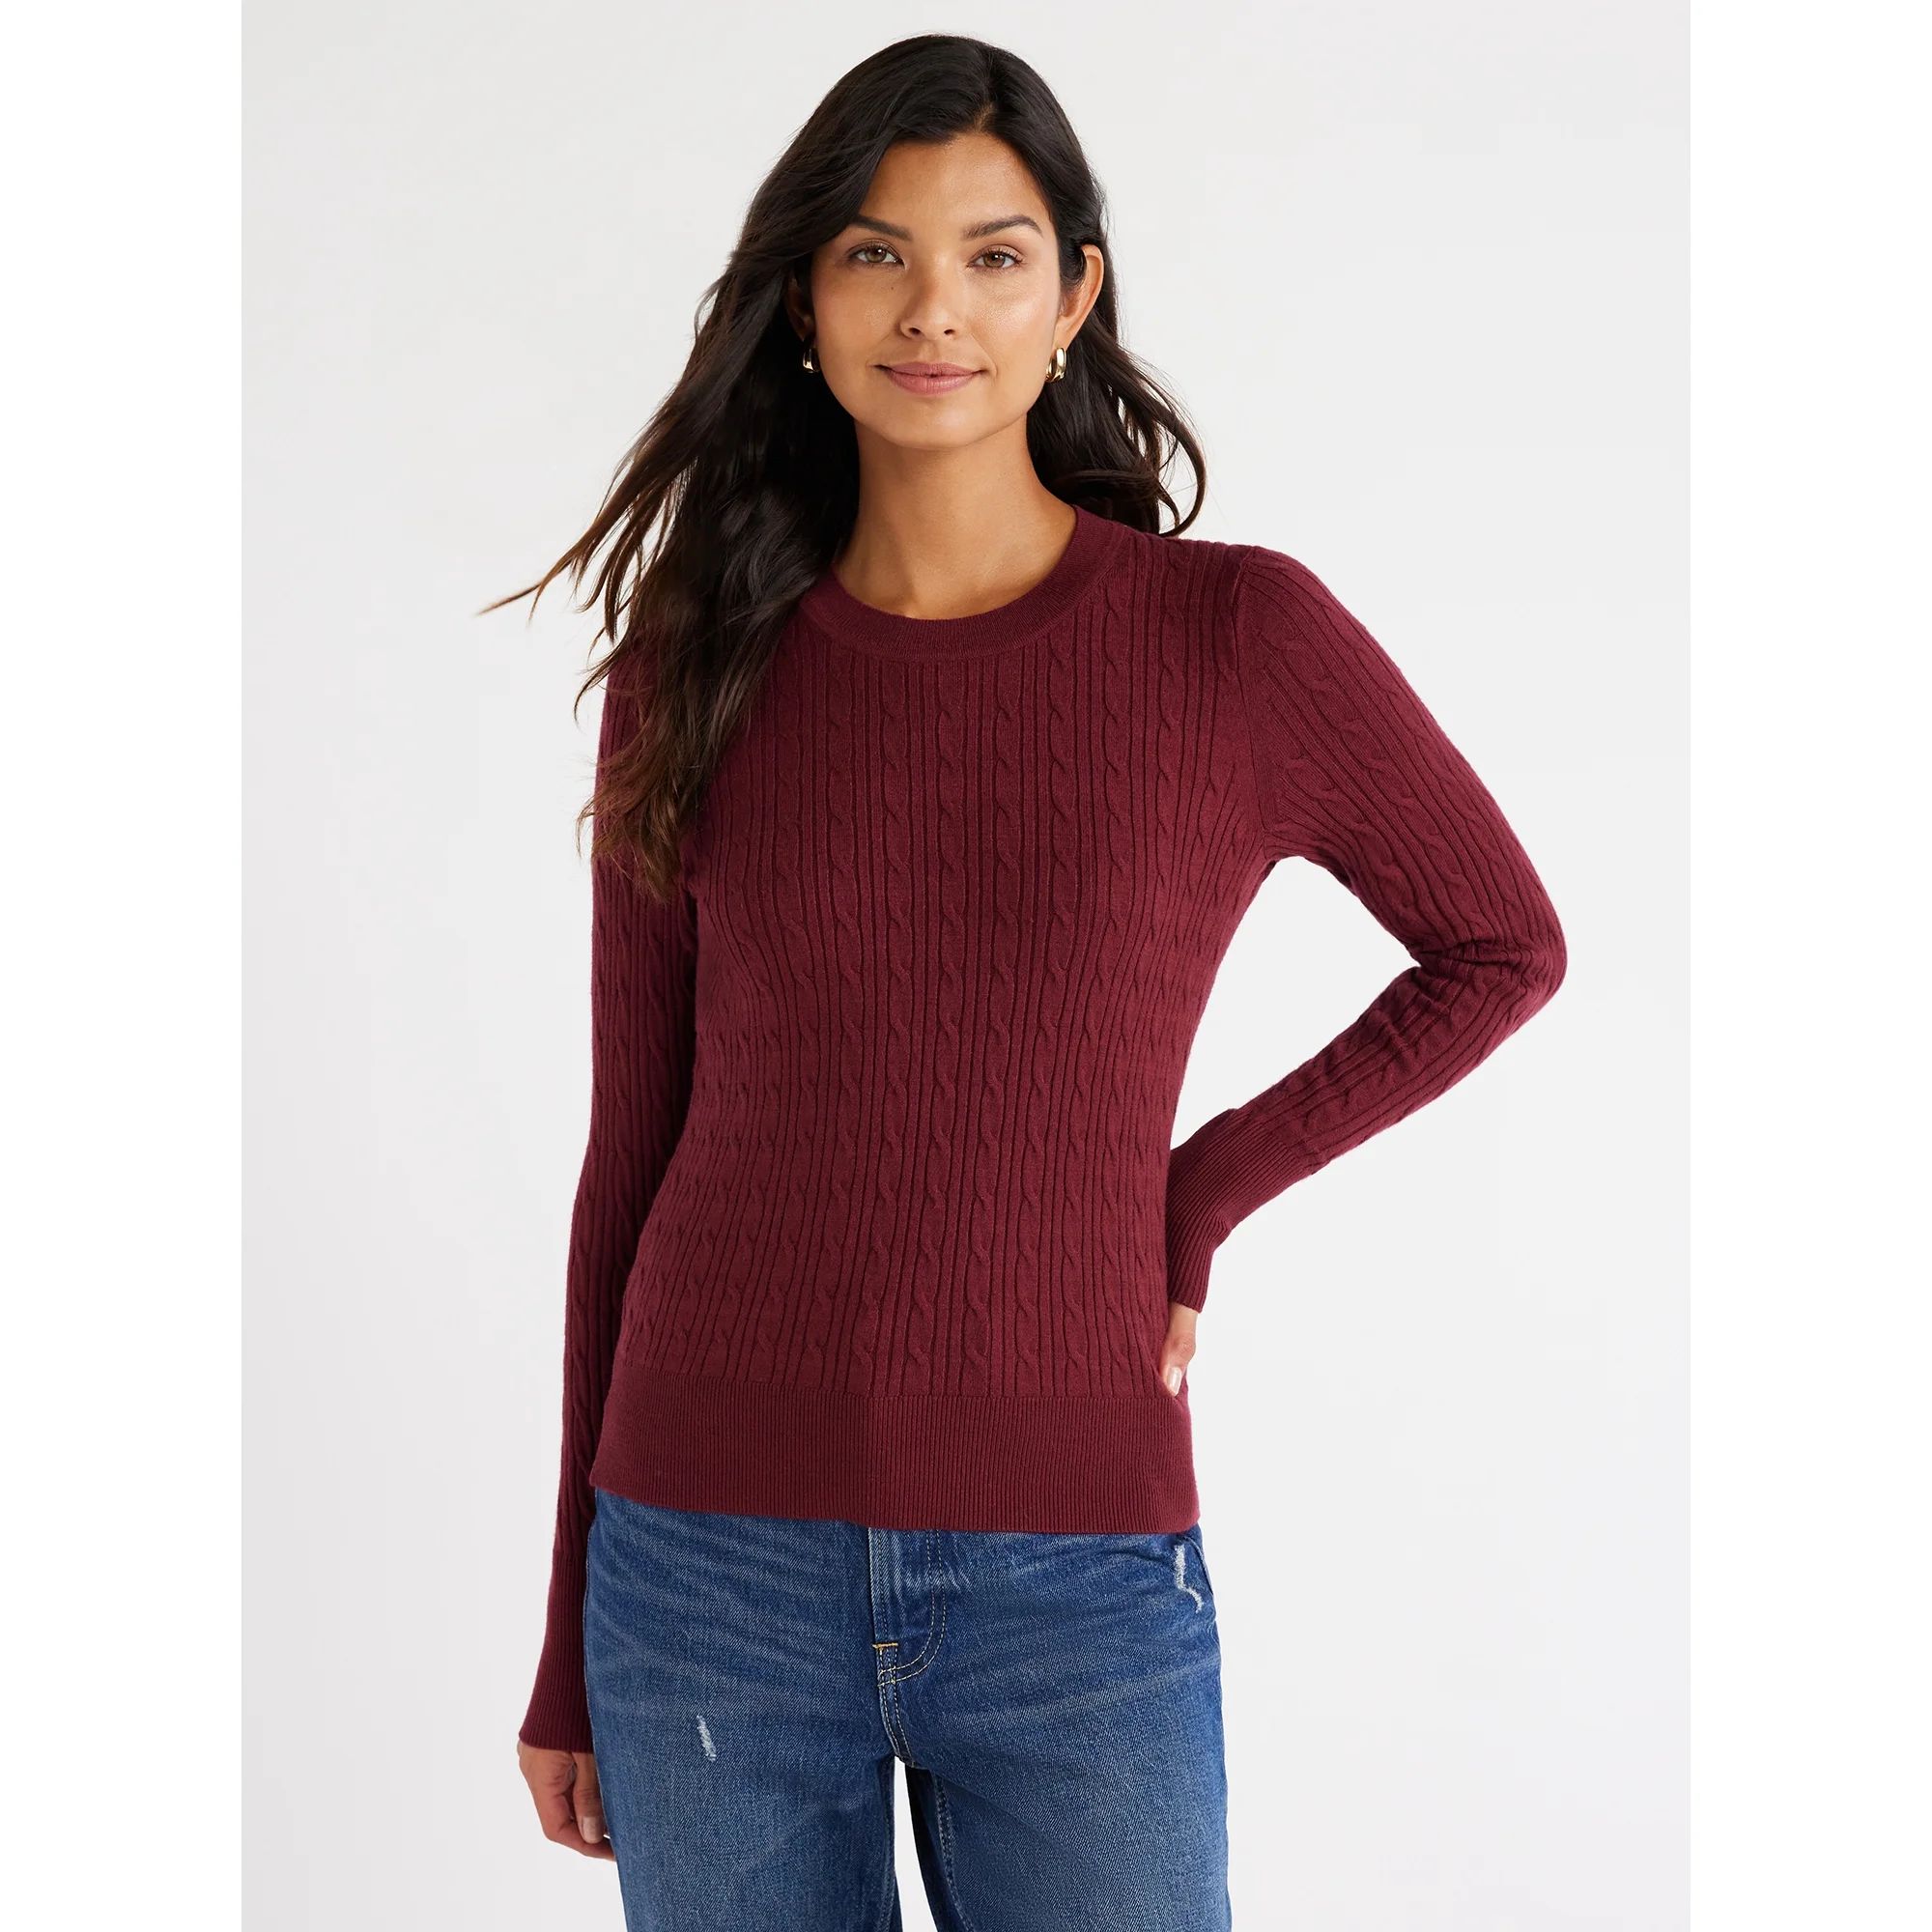 Free Assembly Women’s Cable Knit Crewneck Sweater, Midweight, Sizes XS-XXXL | Walmart (US)